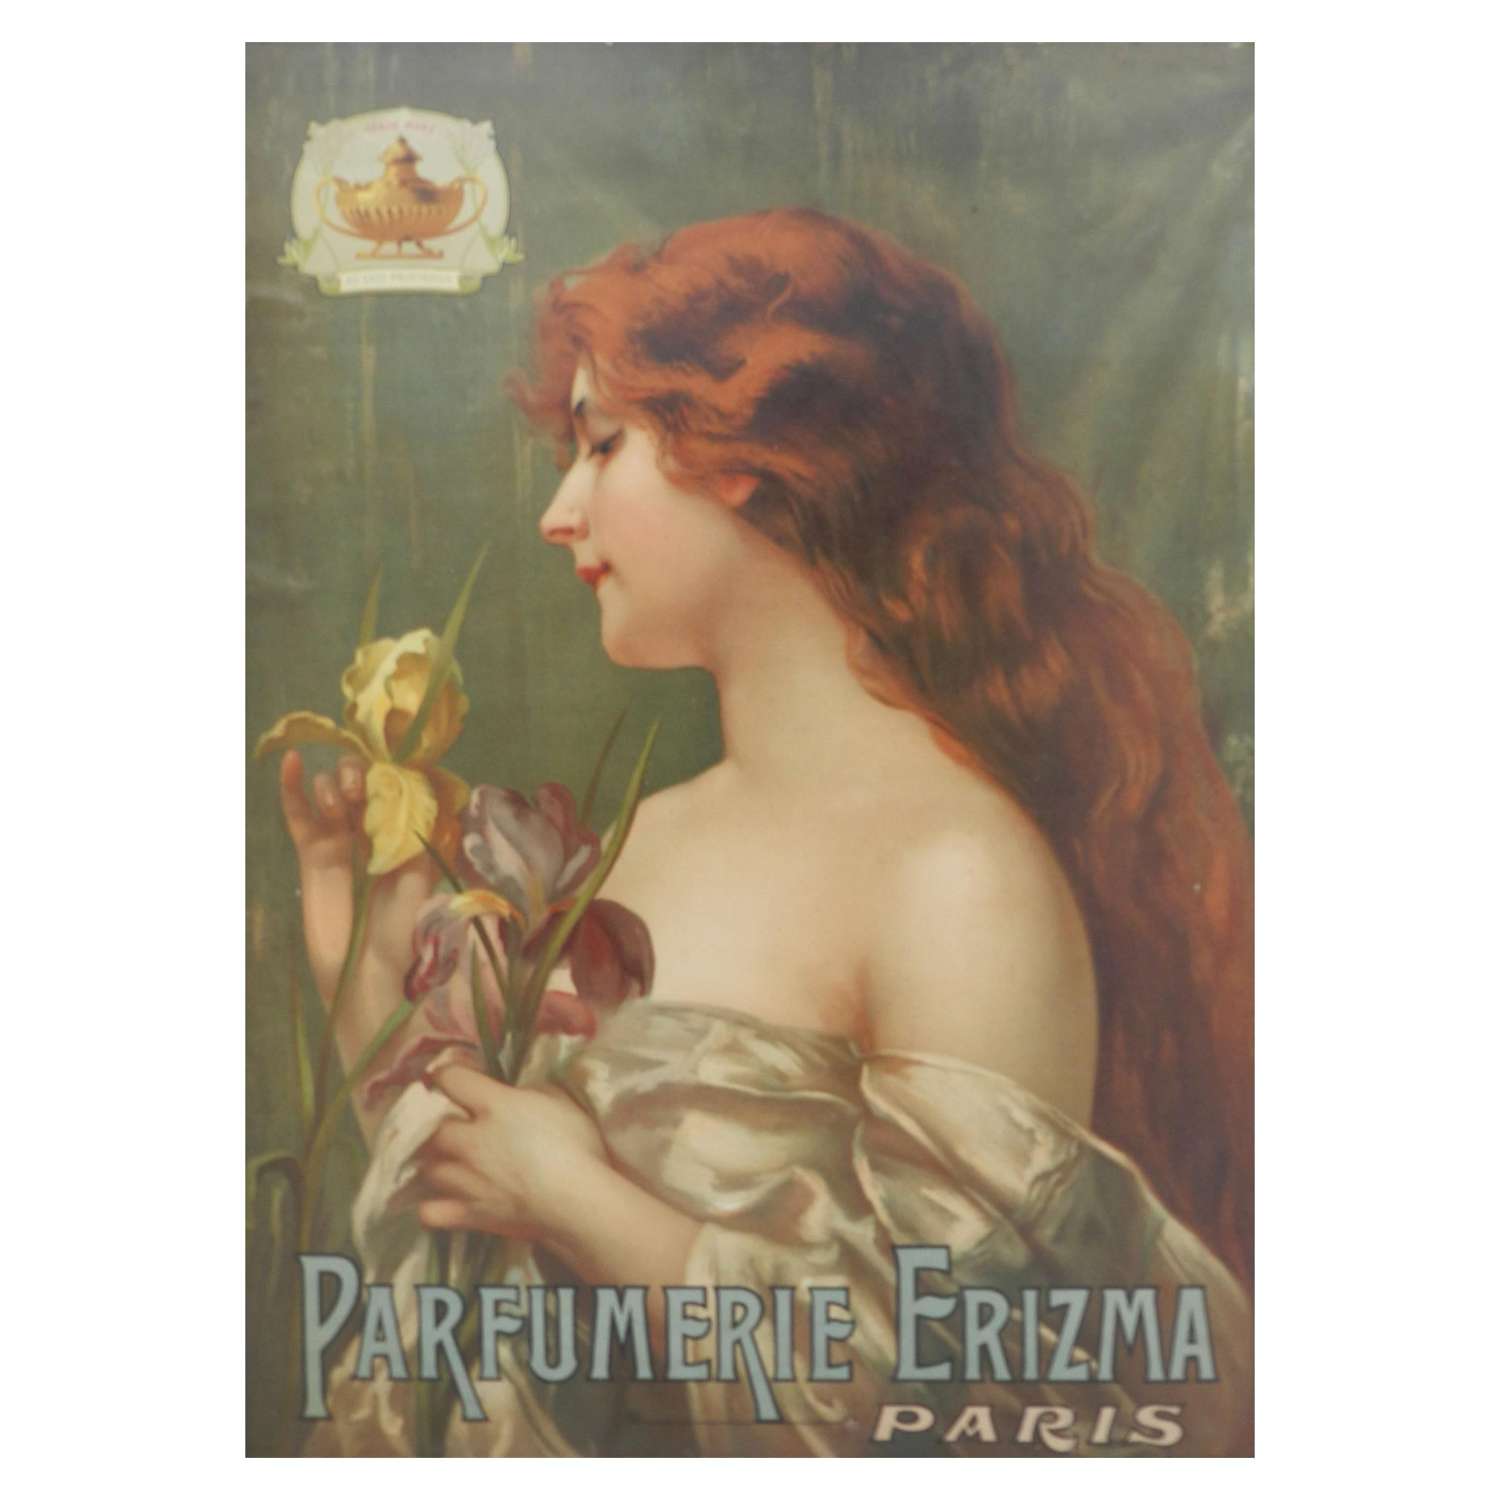 Perfume Paris Advertising Poster Wall Plaque Erizma Belle Epoque FREE SHIPPING